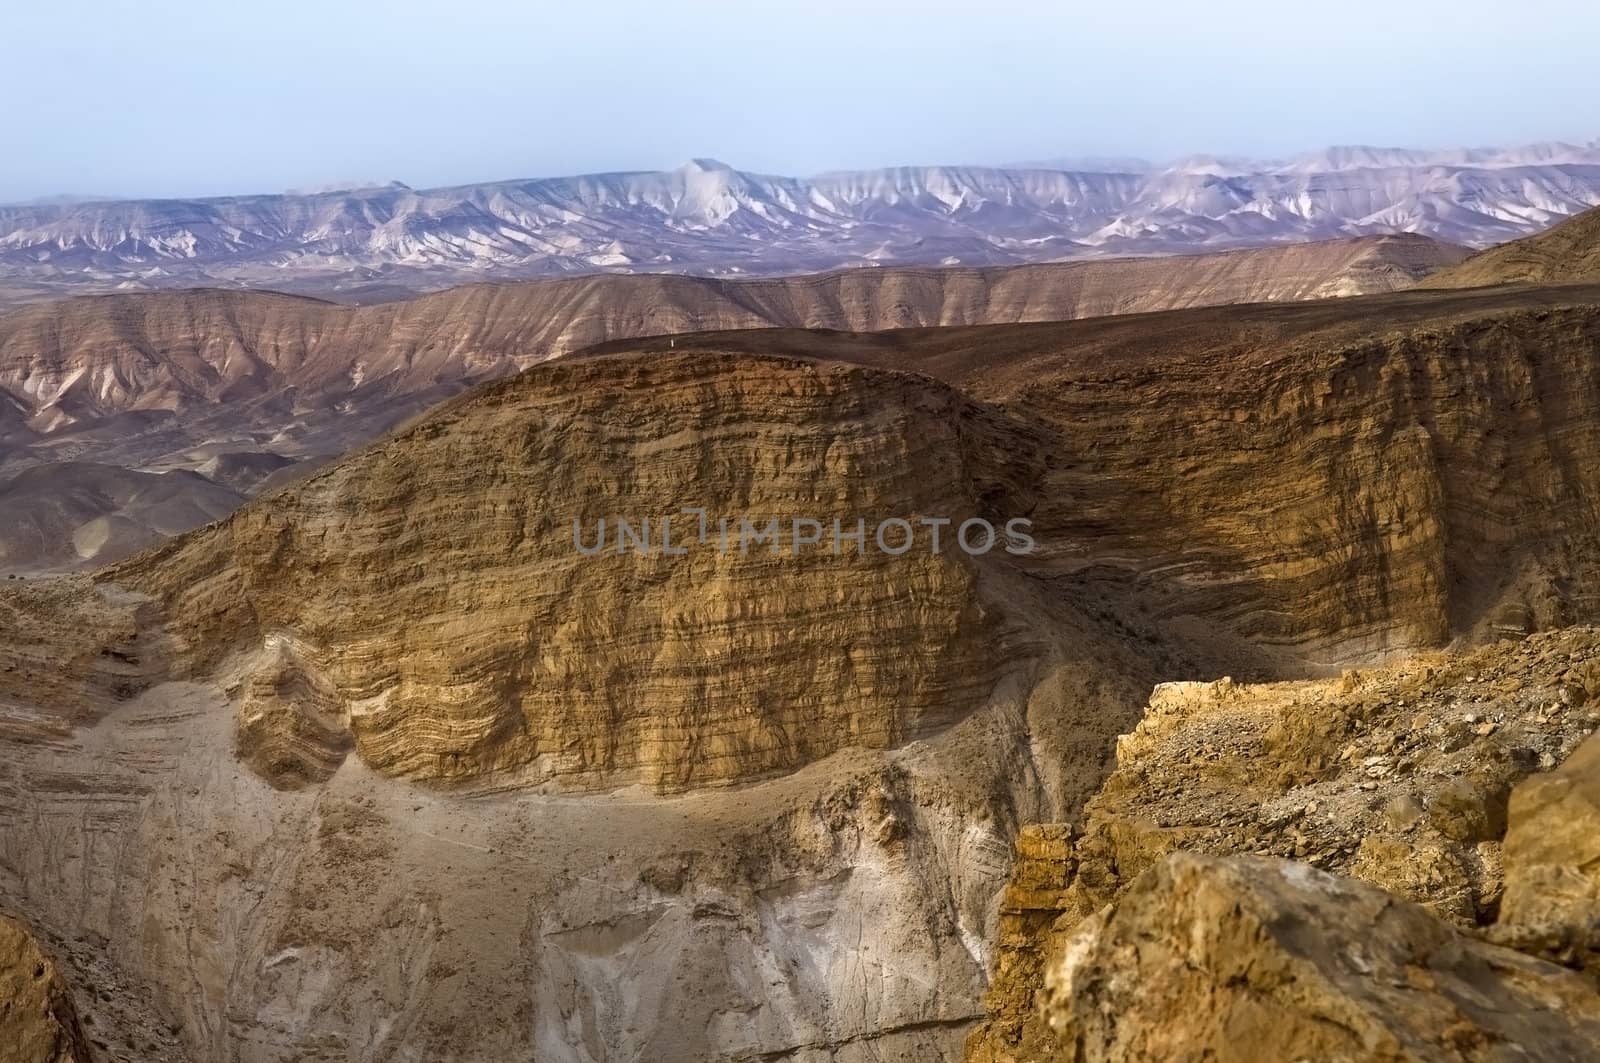 Mountain Canyon near the Dead Sea by irisphoto4